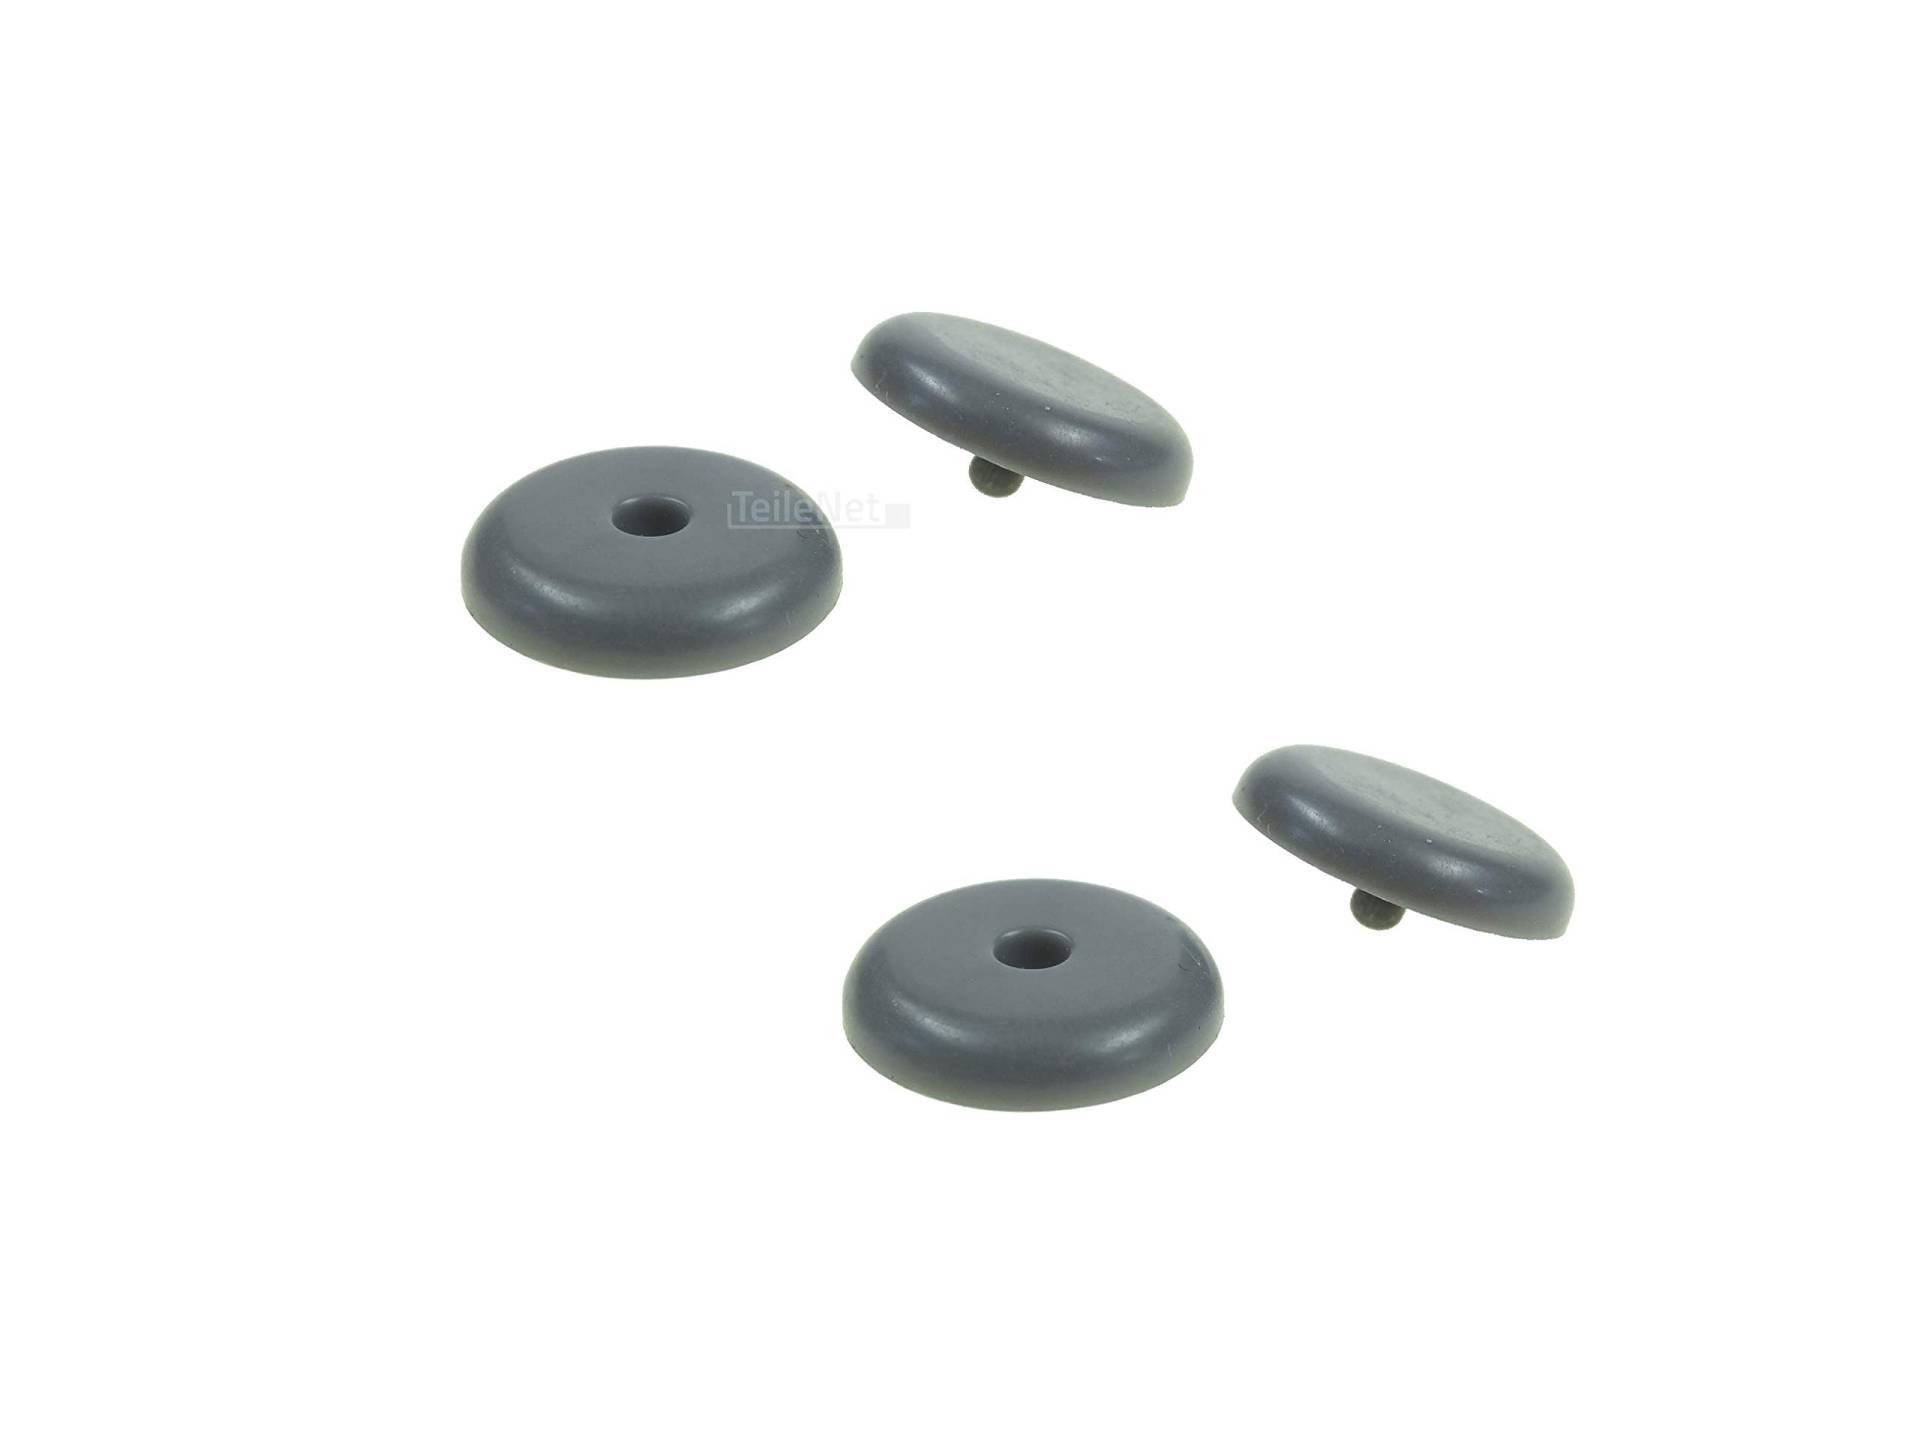 2x Gurtstopper grau universal Clip Knopf Sicherheitsgurt Stopper von Mafco